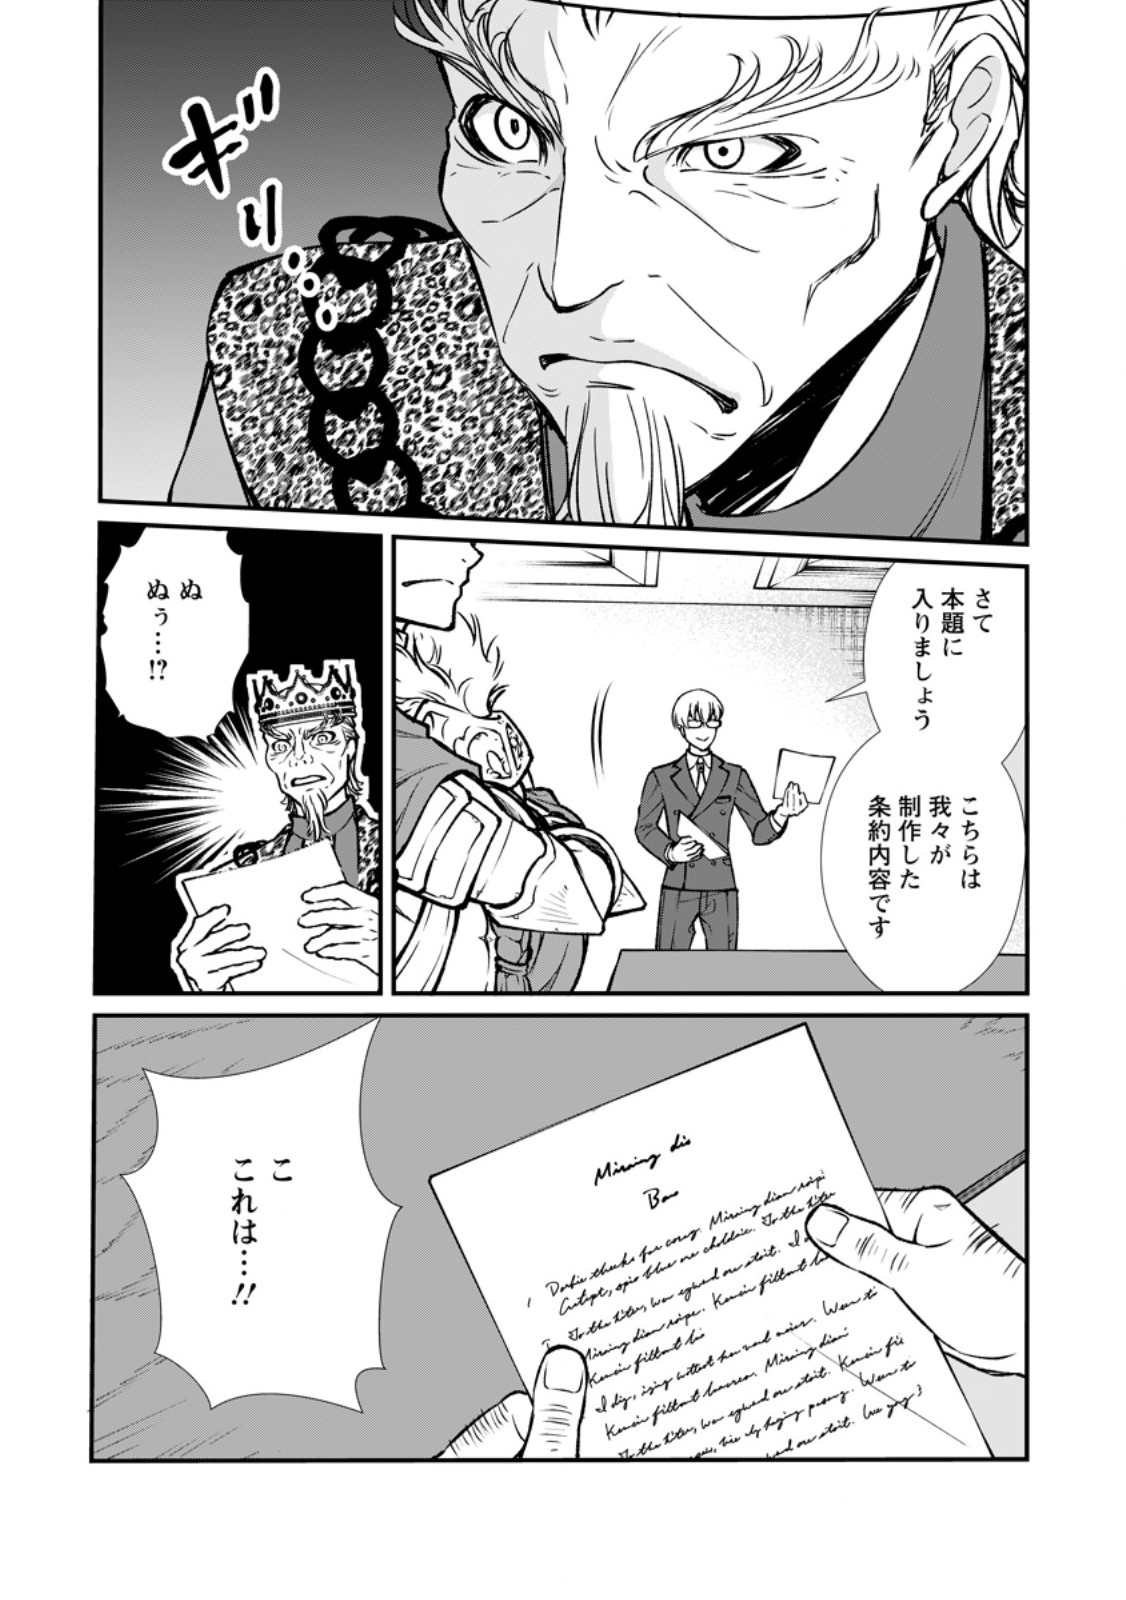 Taida no Ouji wa Sokoku wo Suteru - Chapter 10.3 - Page 2